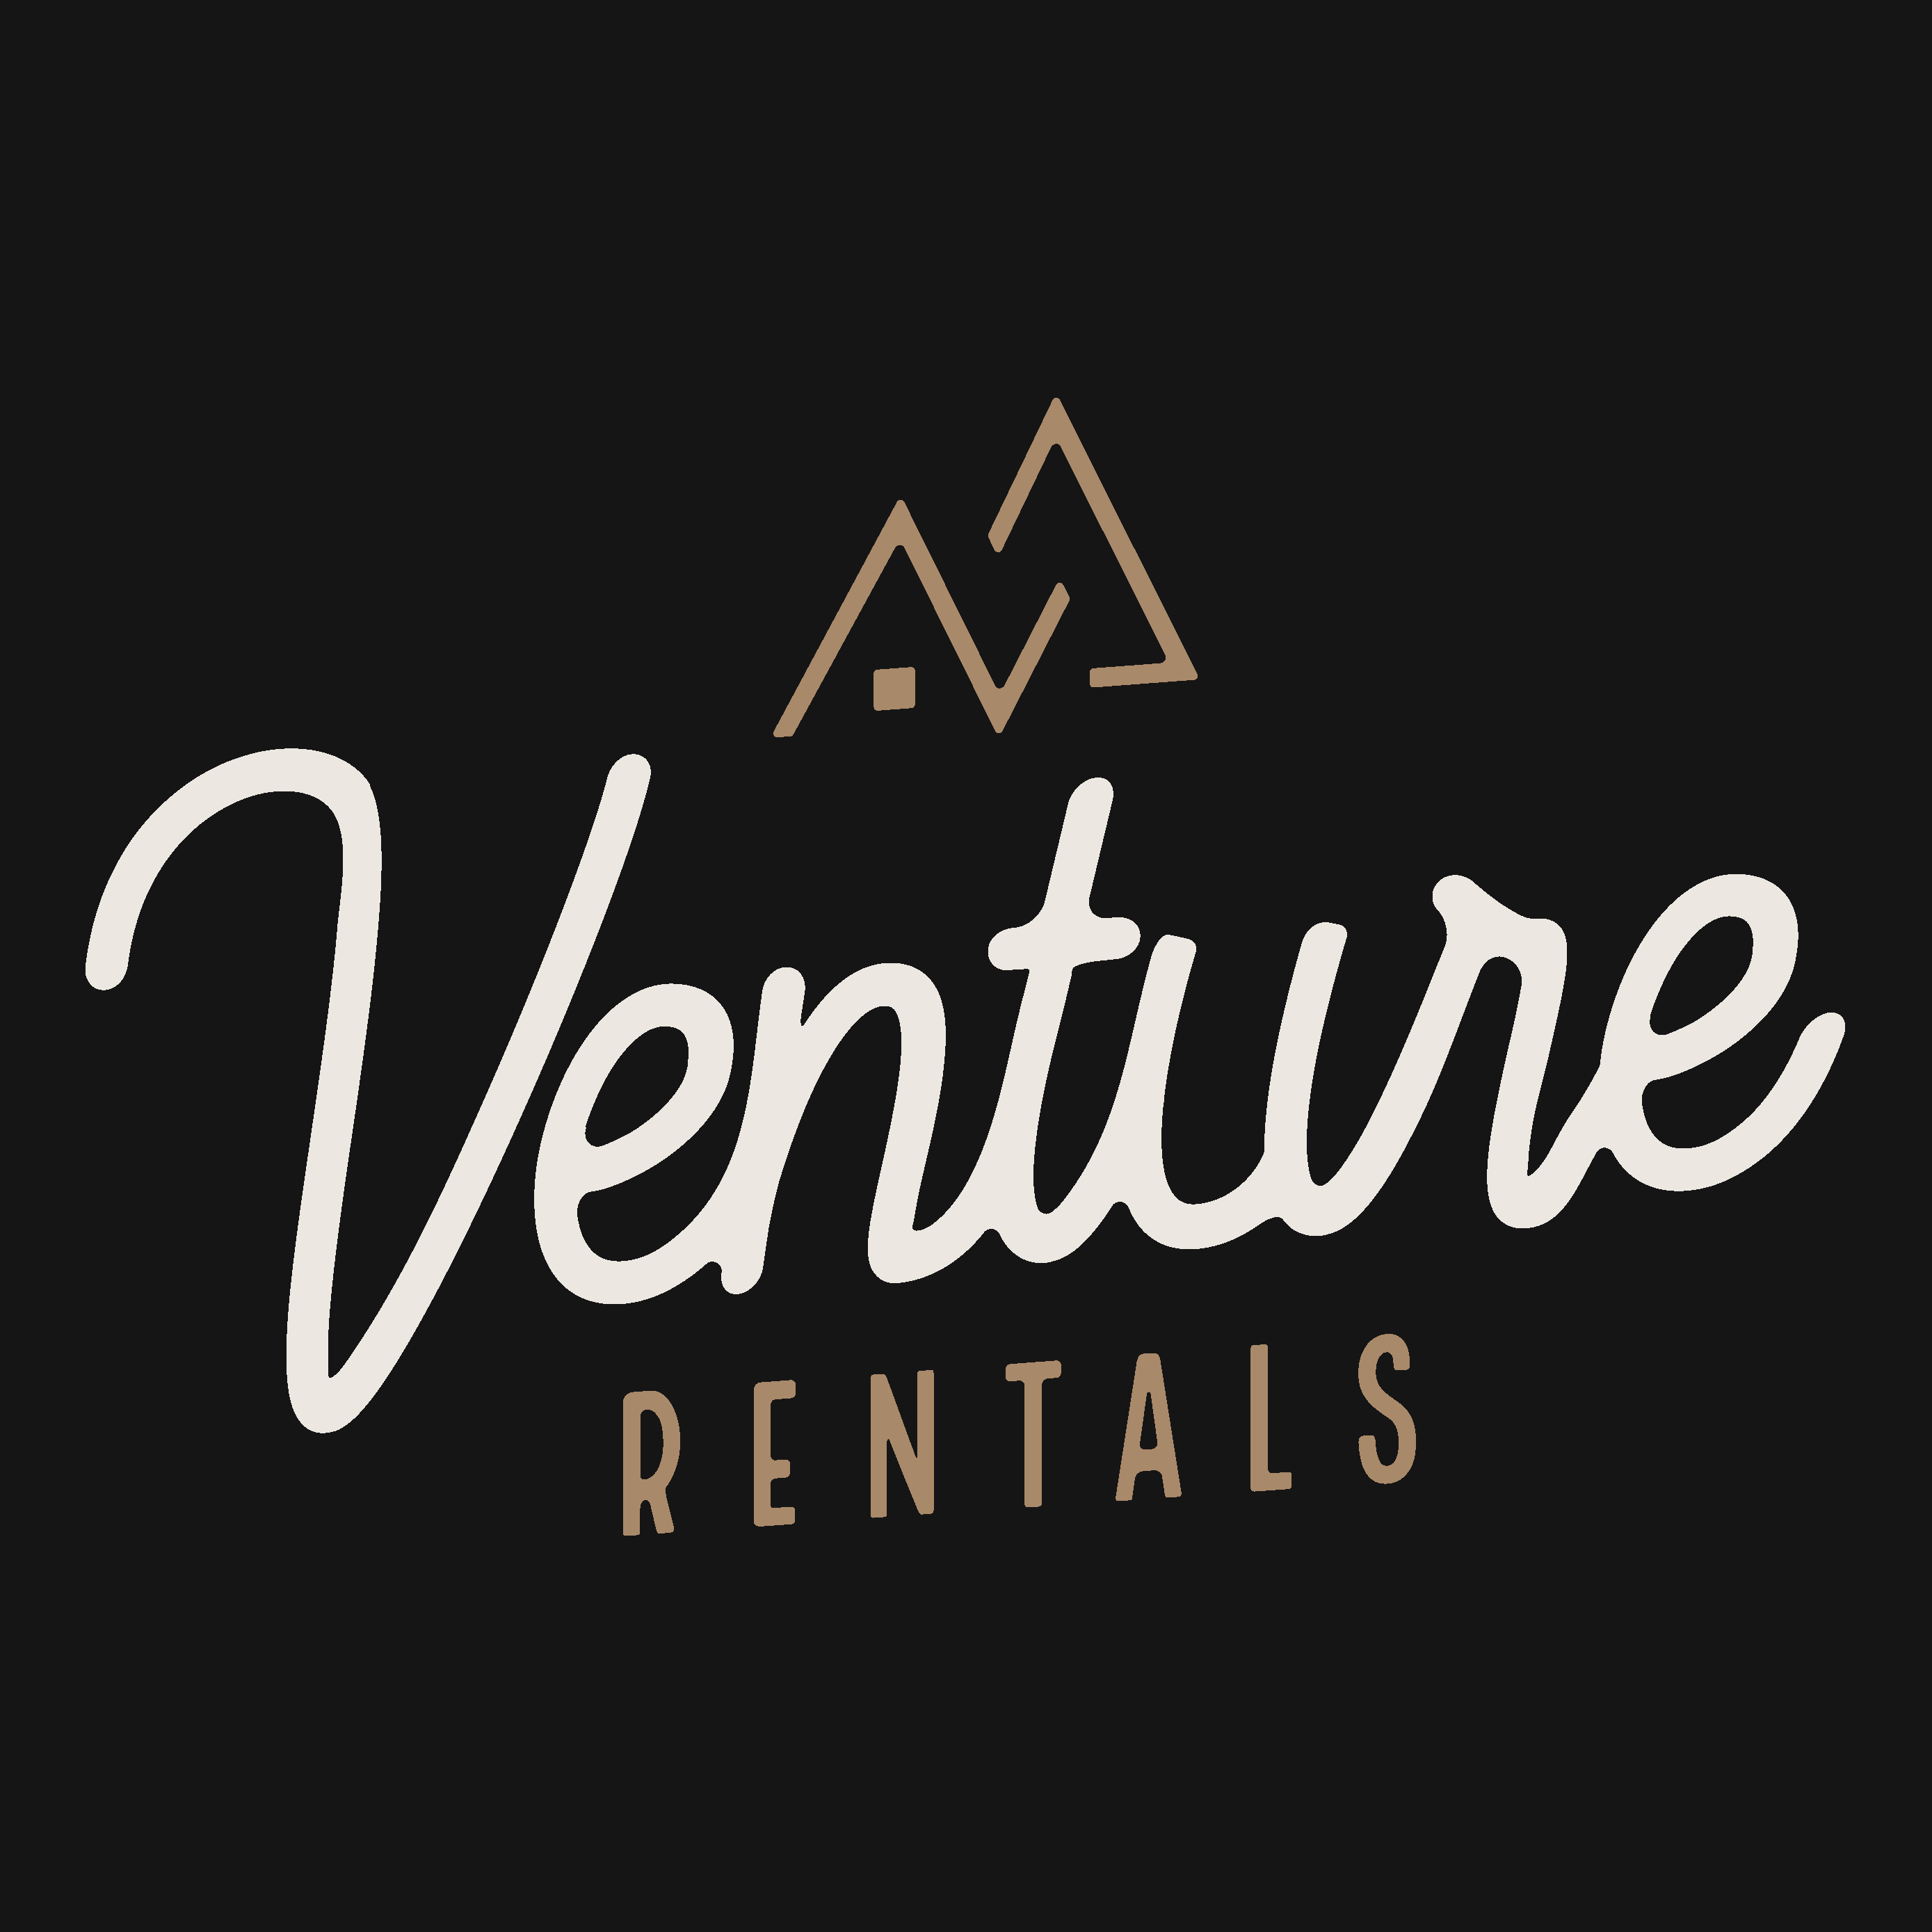 Venture Rentals brand logo